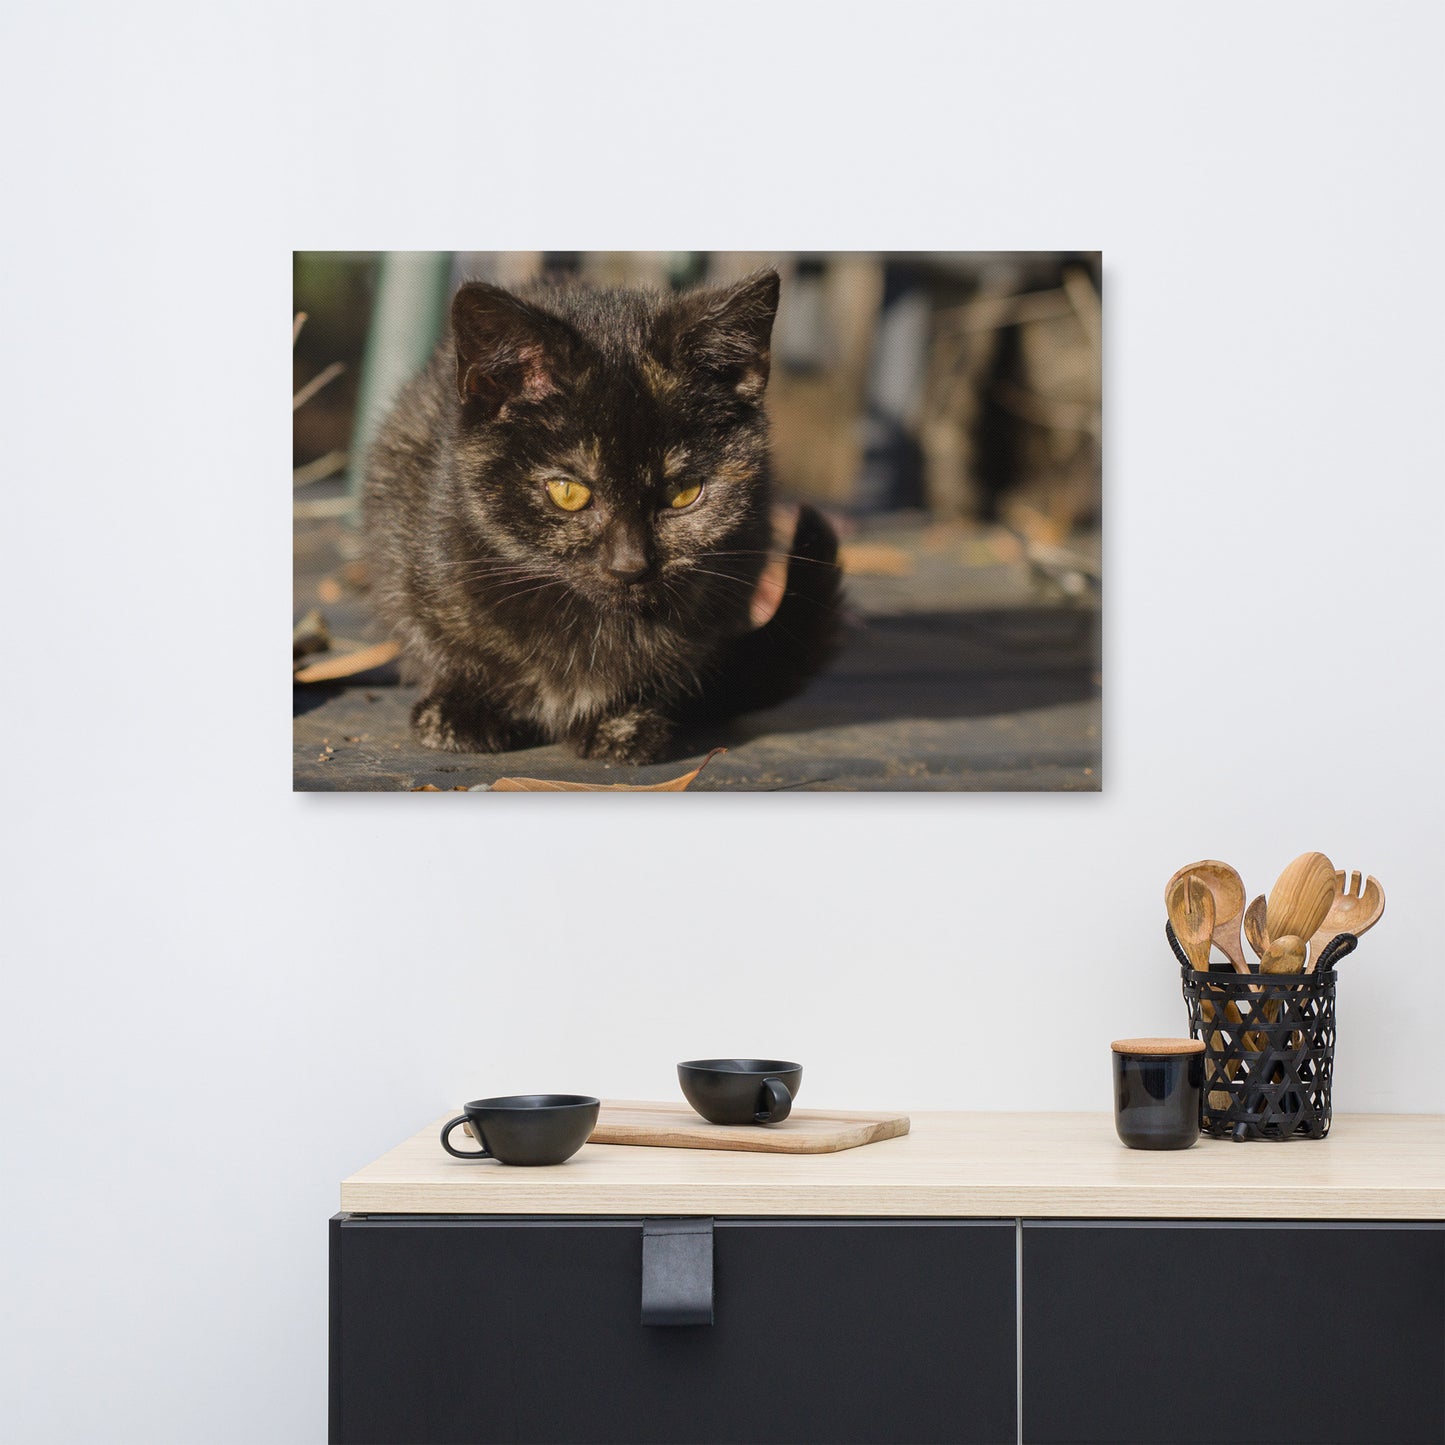 Chocolate the Stray Kitten Animal / Wildlife - Cat Photograph Canvas Wall Art Prints